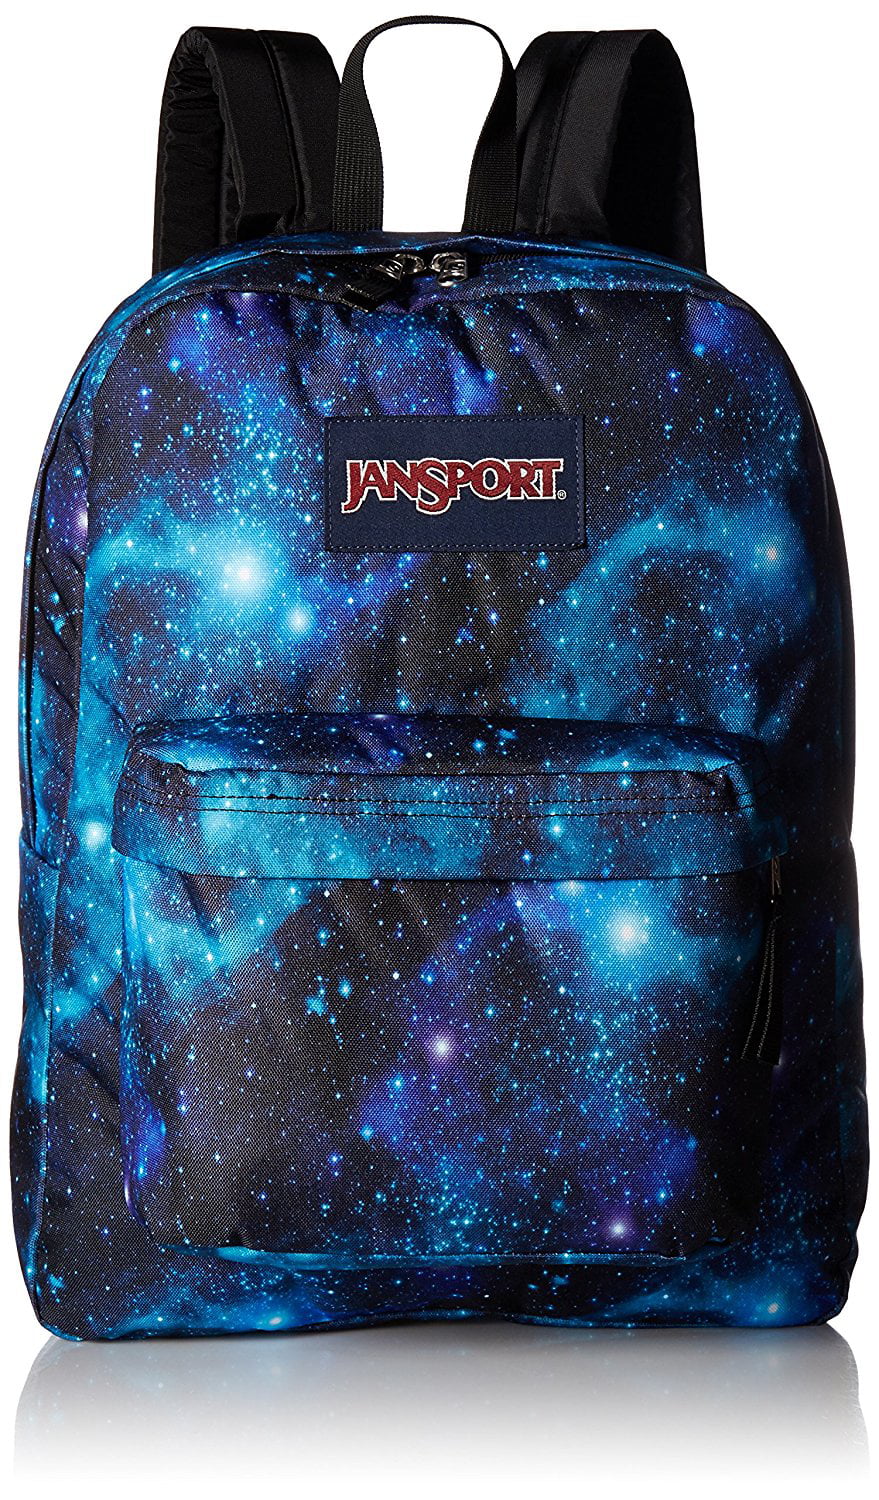 custom champion backpack